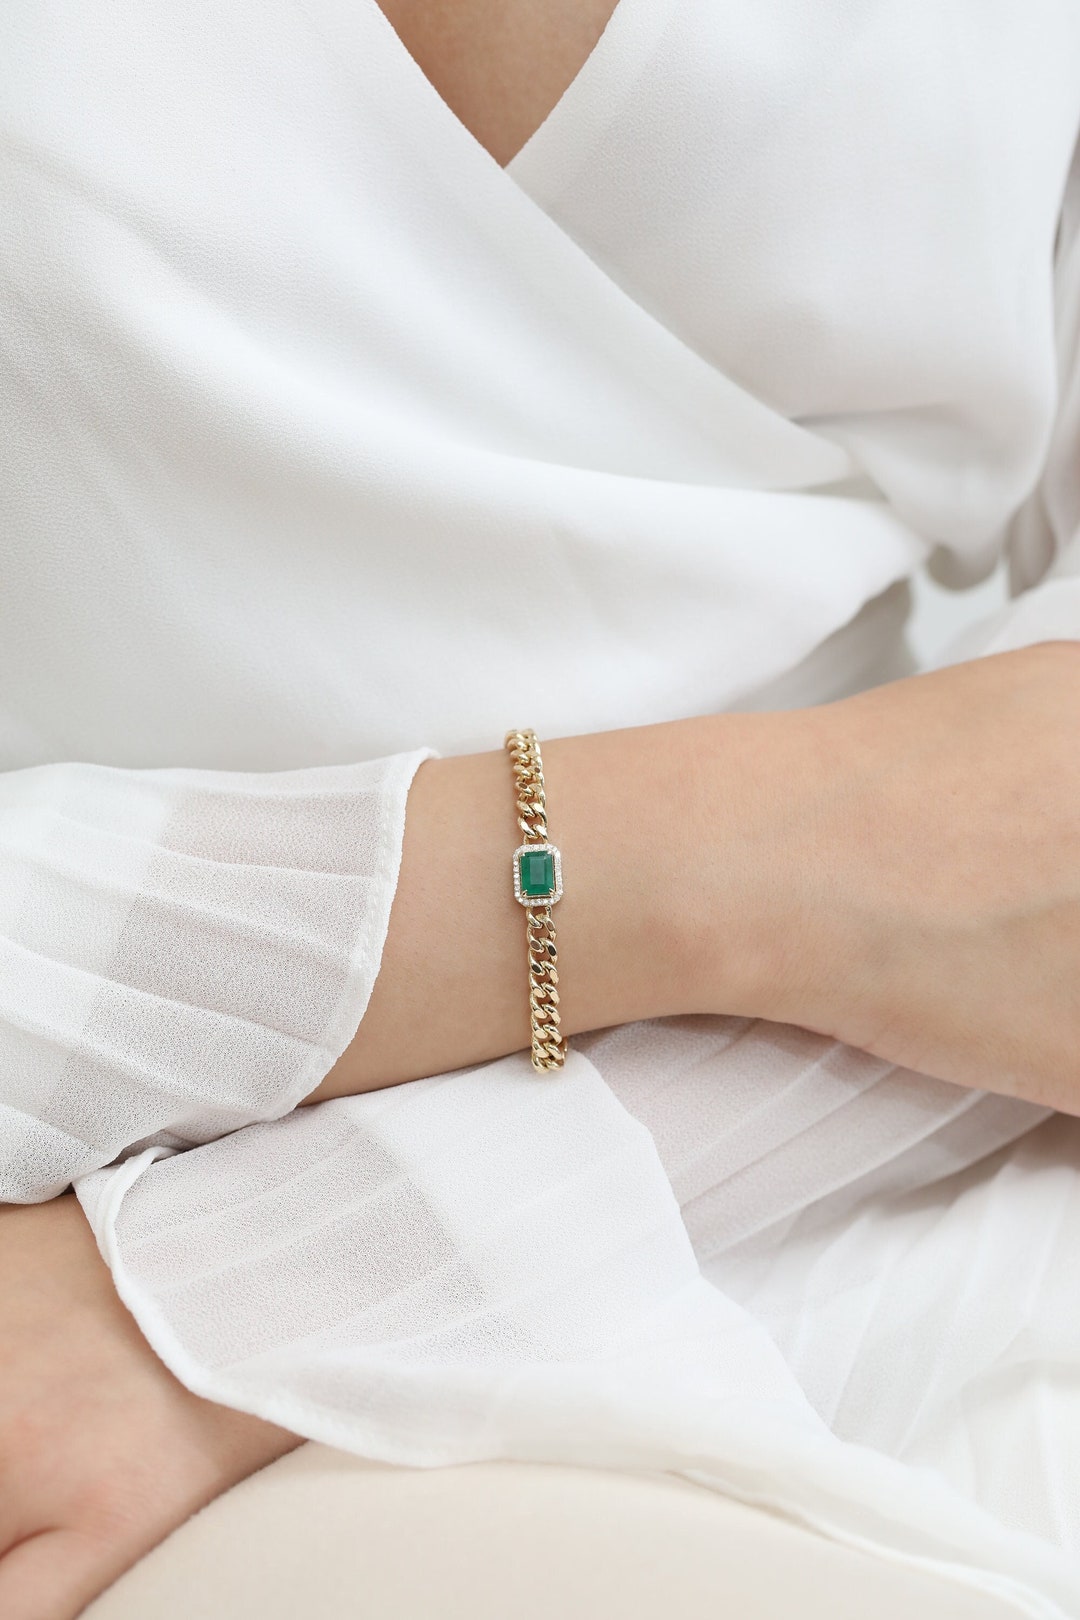 Elaina Gold Adjustable Chain Bracelet in Emerald Cat's Eye | Kendra Scott